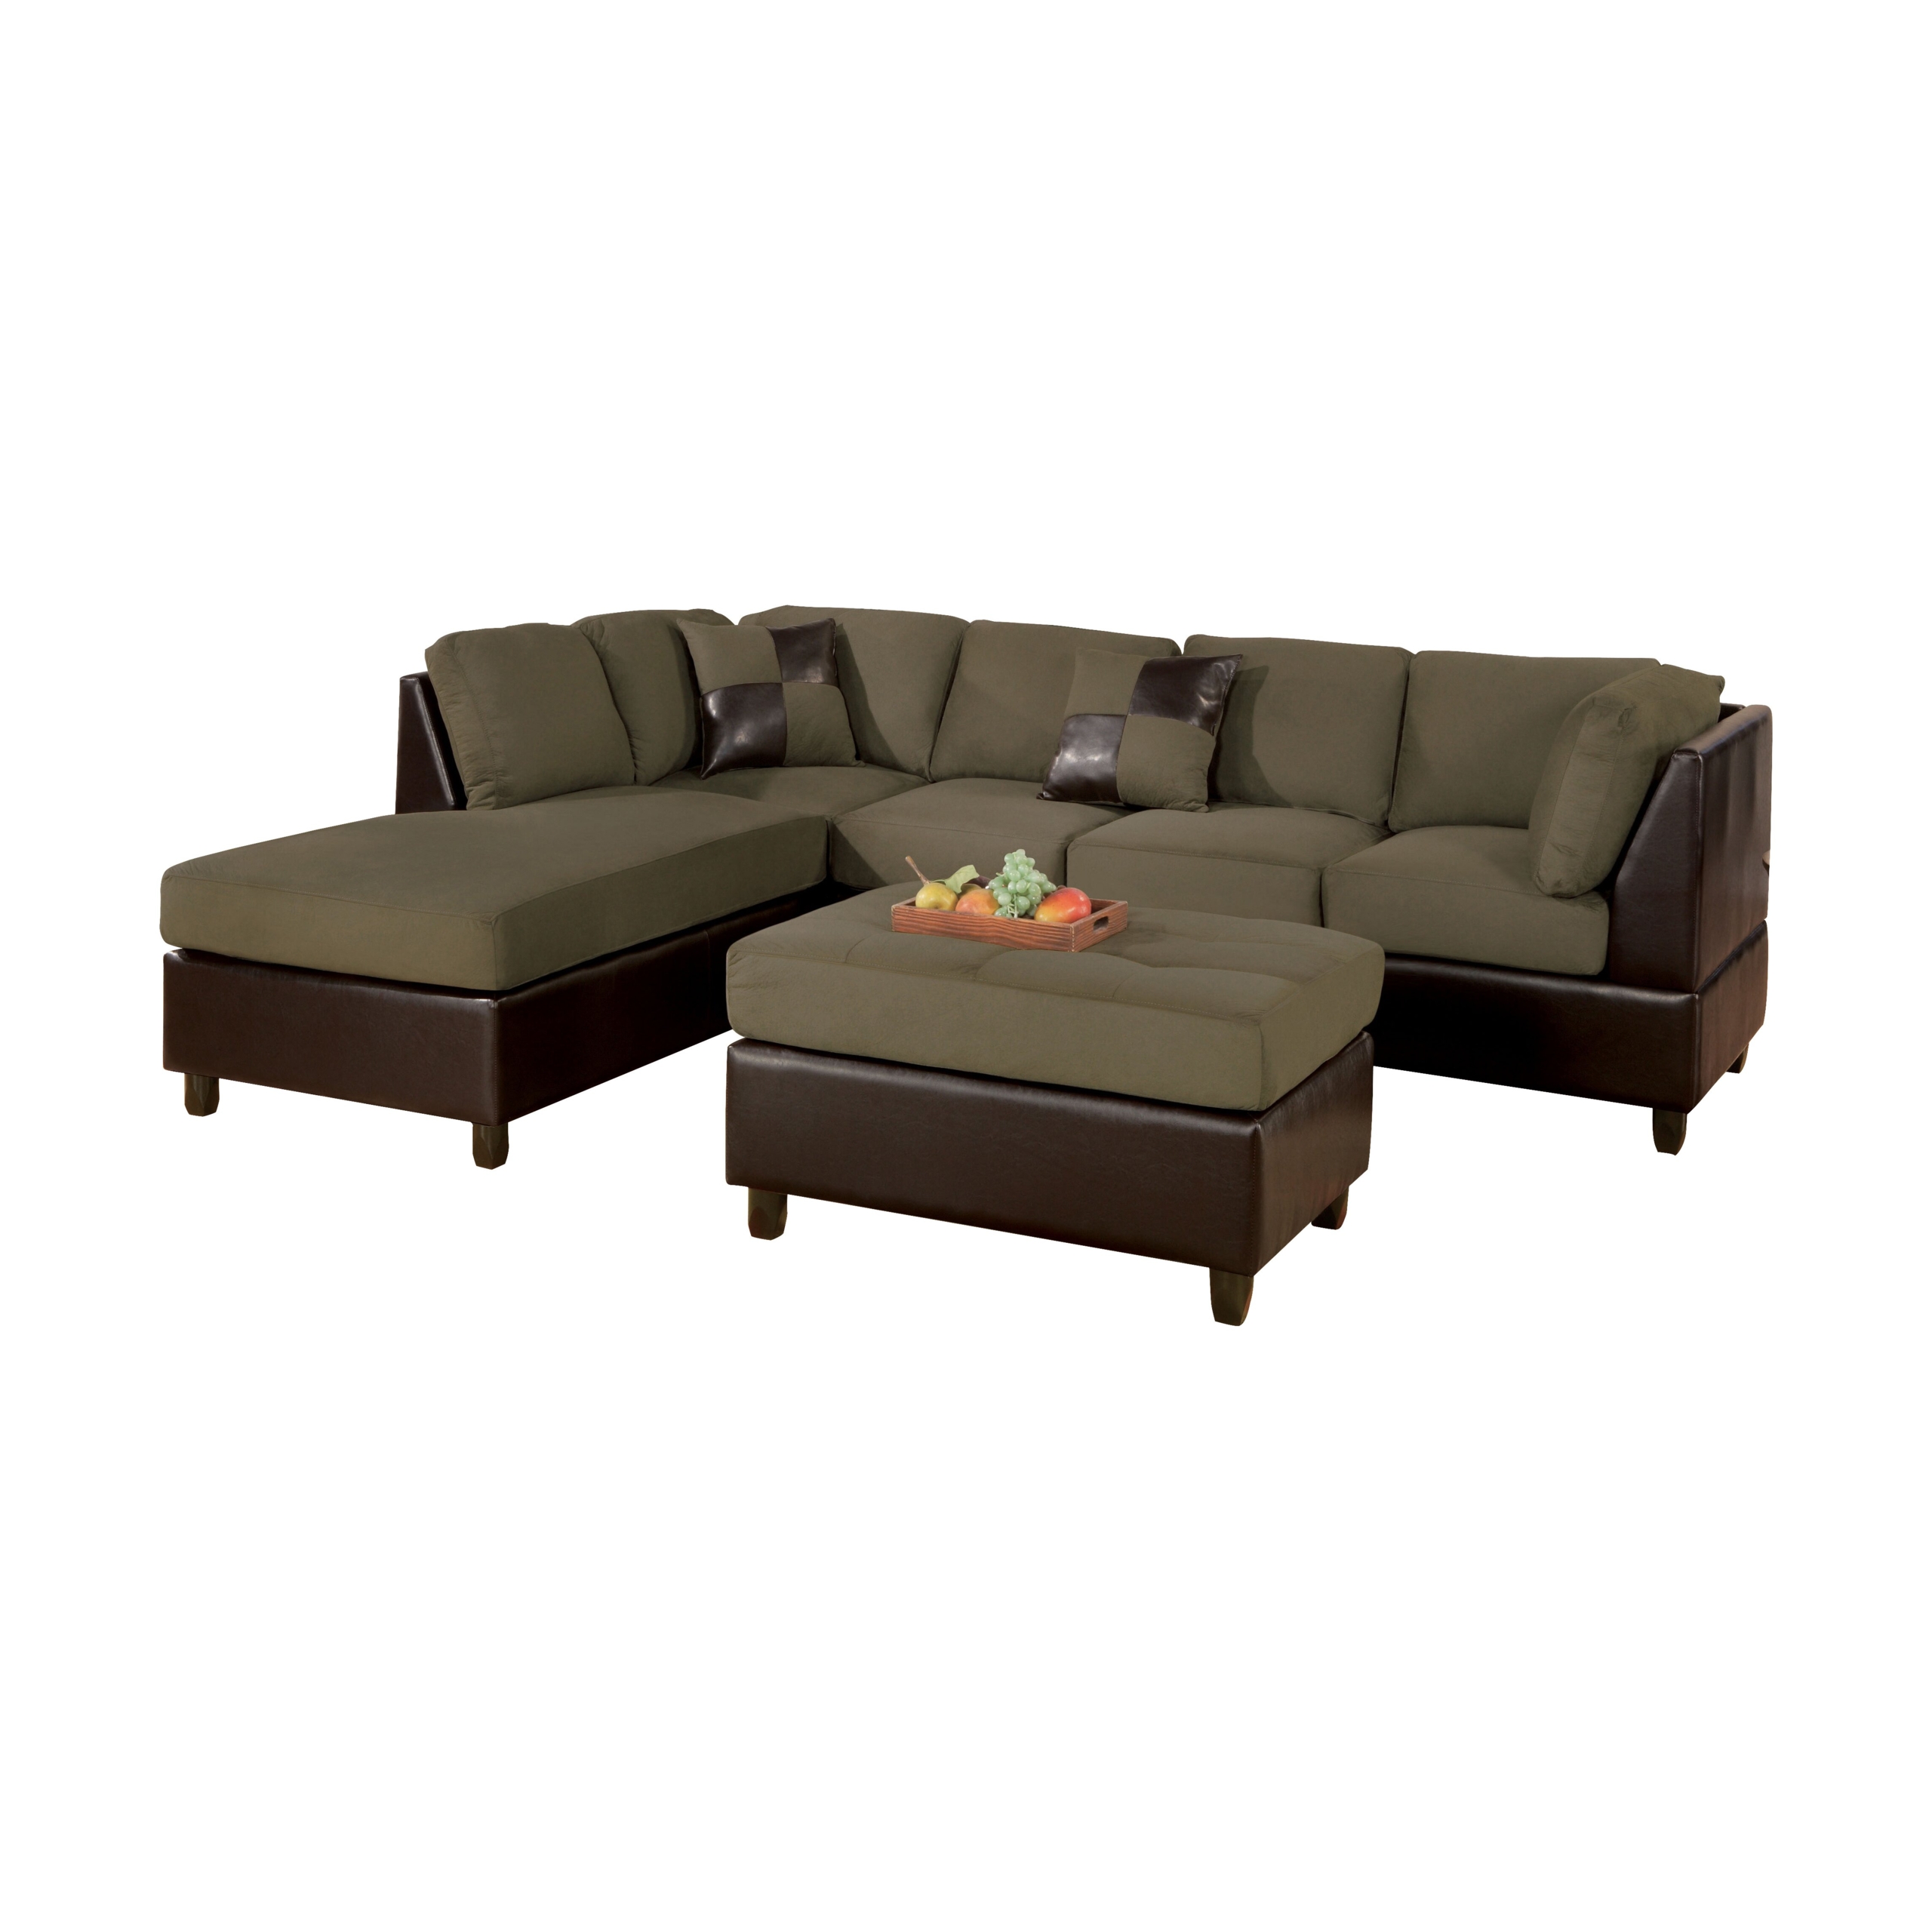 Microfiber sectional sofa with ottoman 1